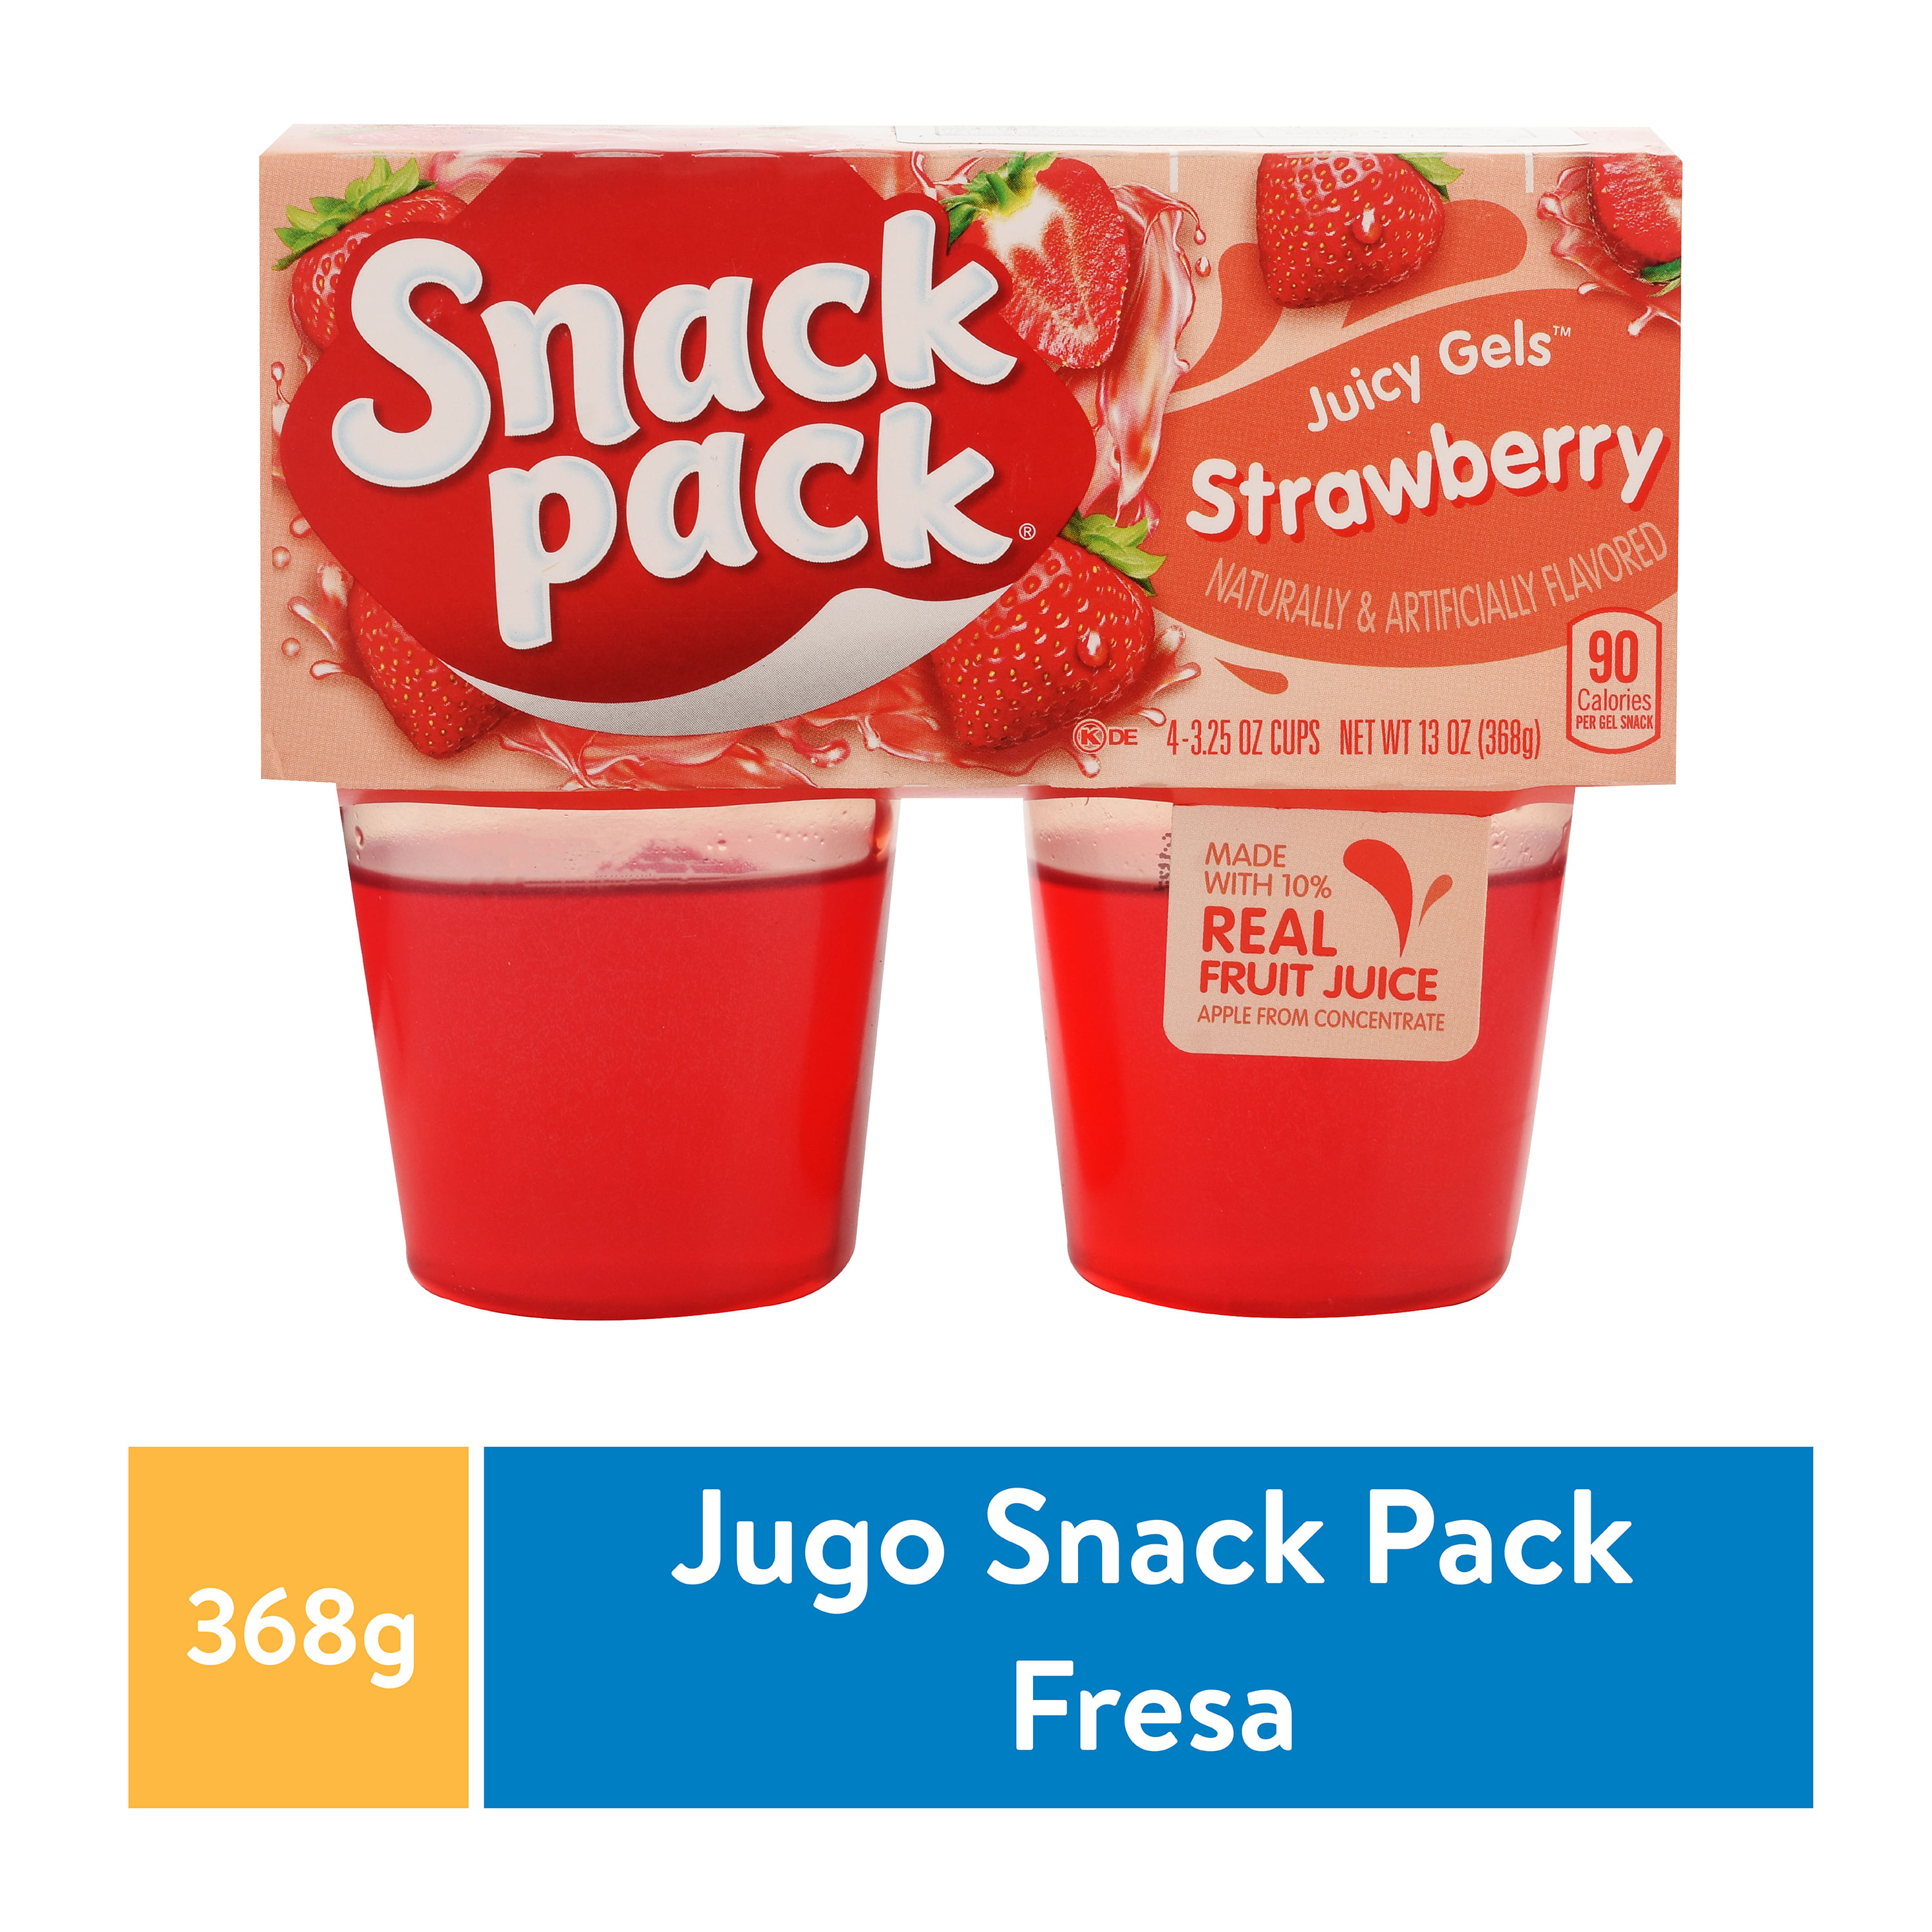 Snack Pack Gelatina sin azúcar 4 pack (Variedad de sabores